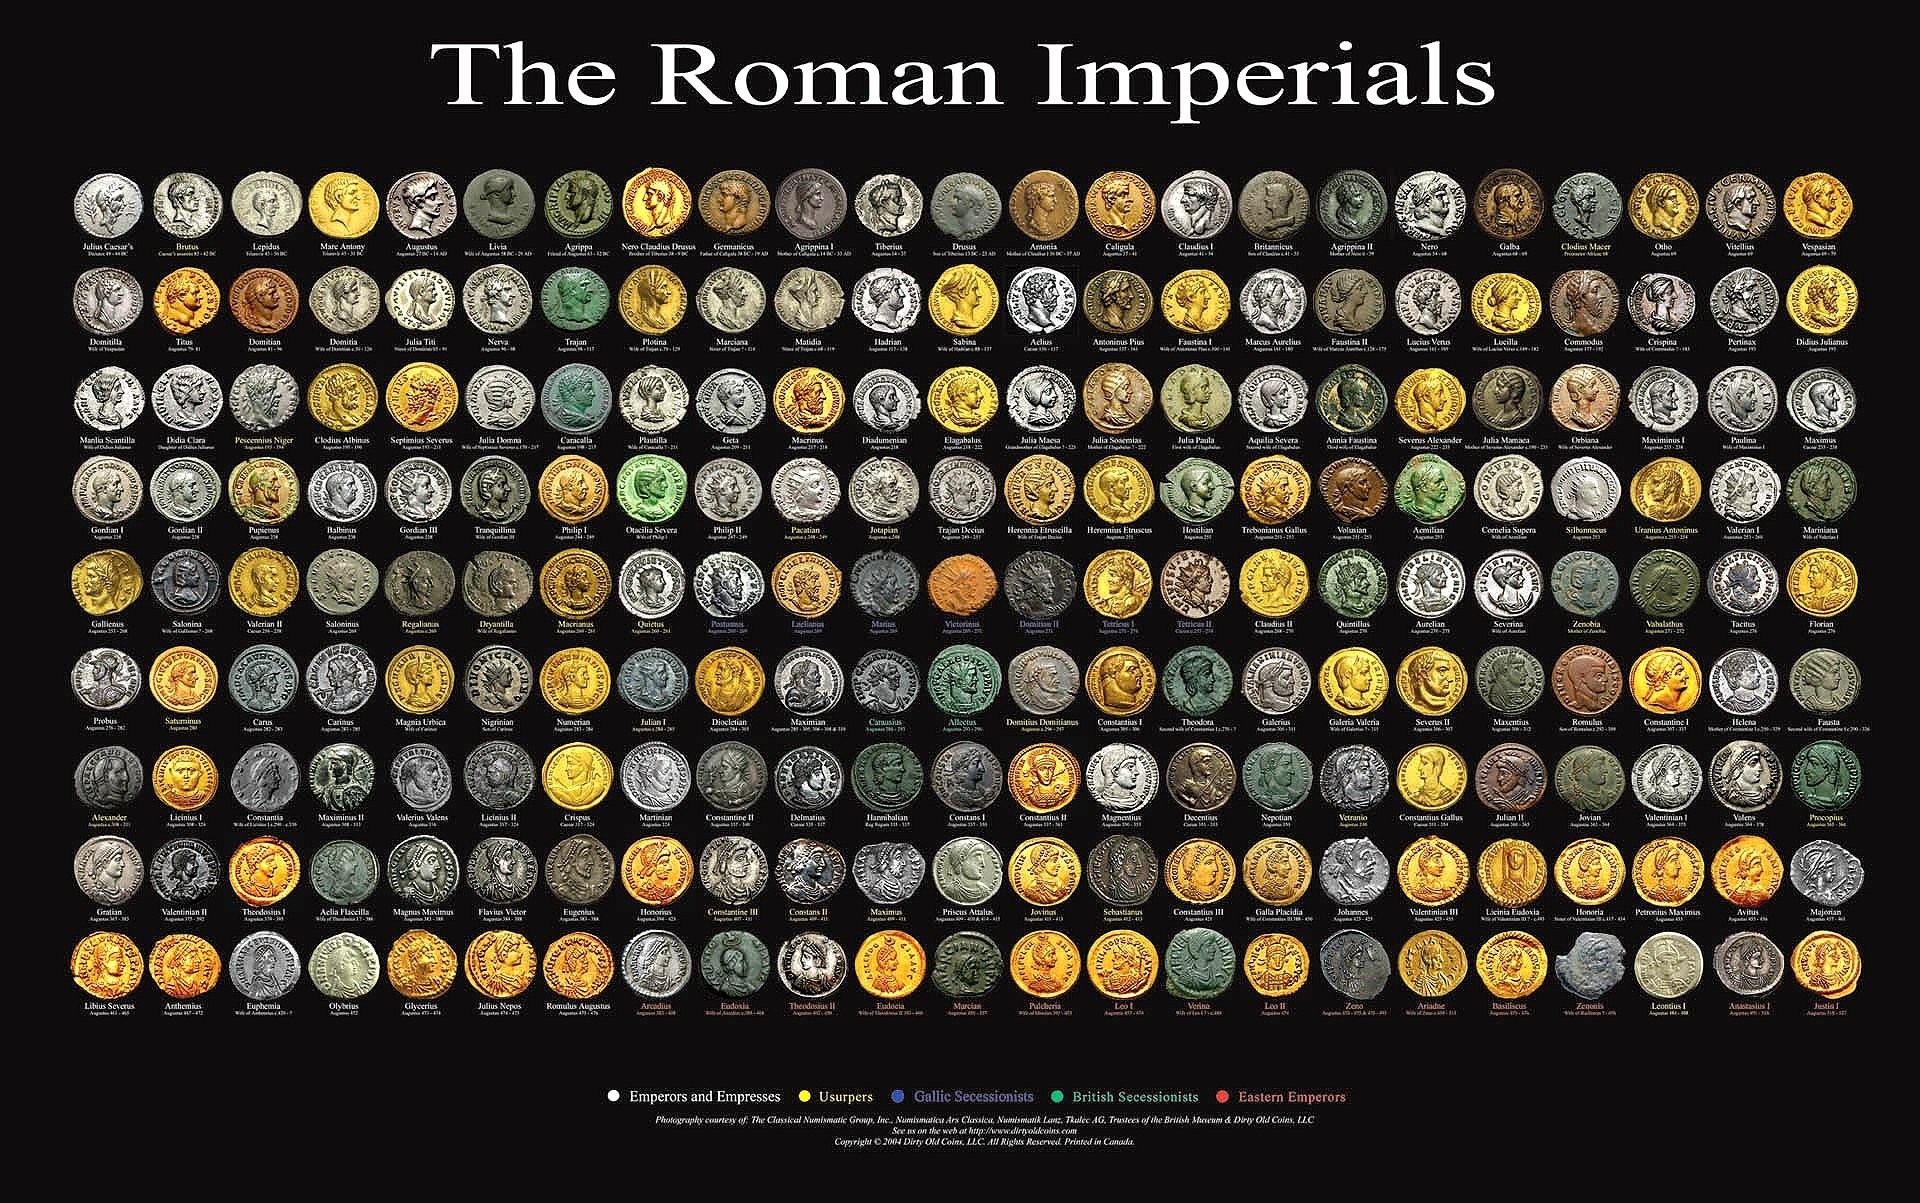 coins, historic, Roman - desktop wallpaper